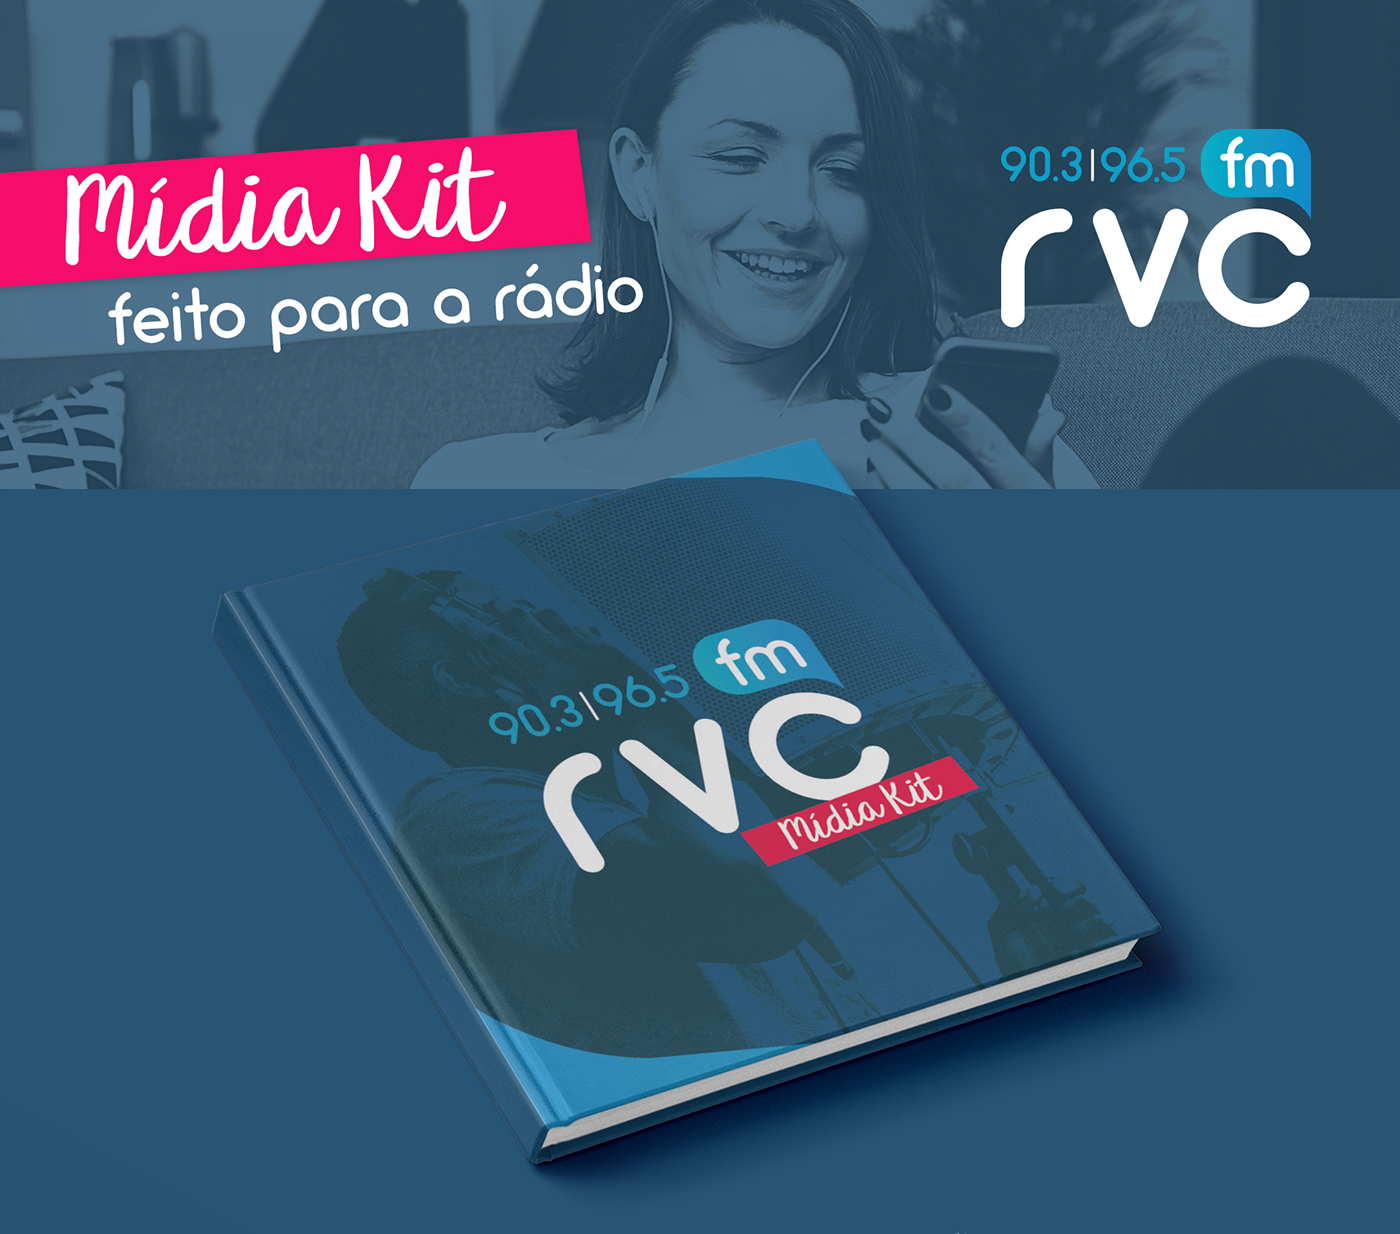 midia kit Radio rvc fm digital book